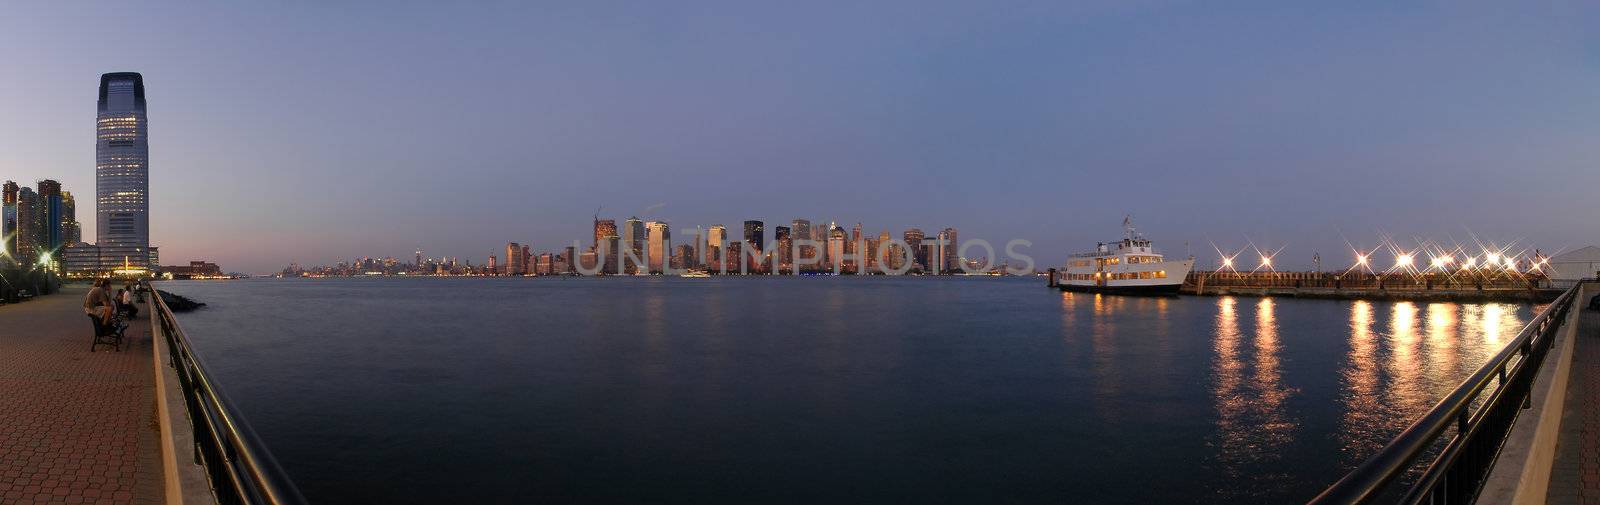 NY panorama by rorem